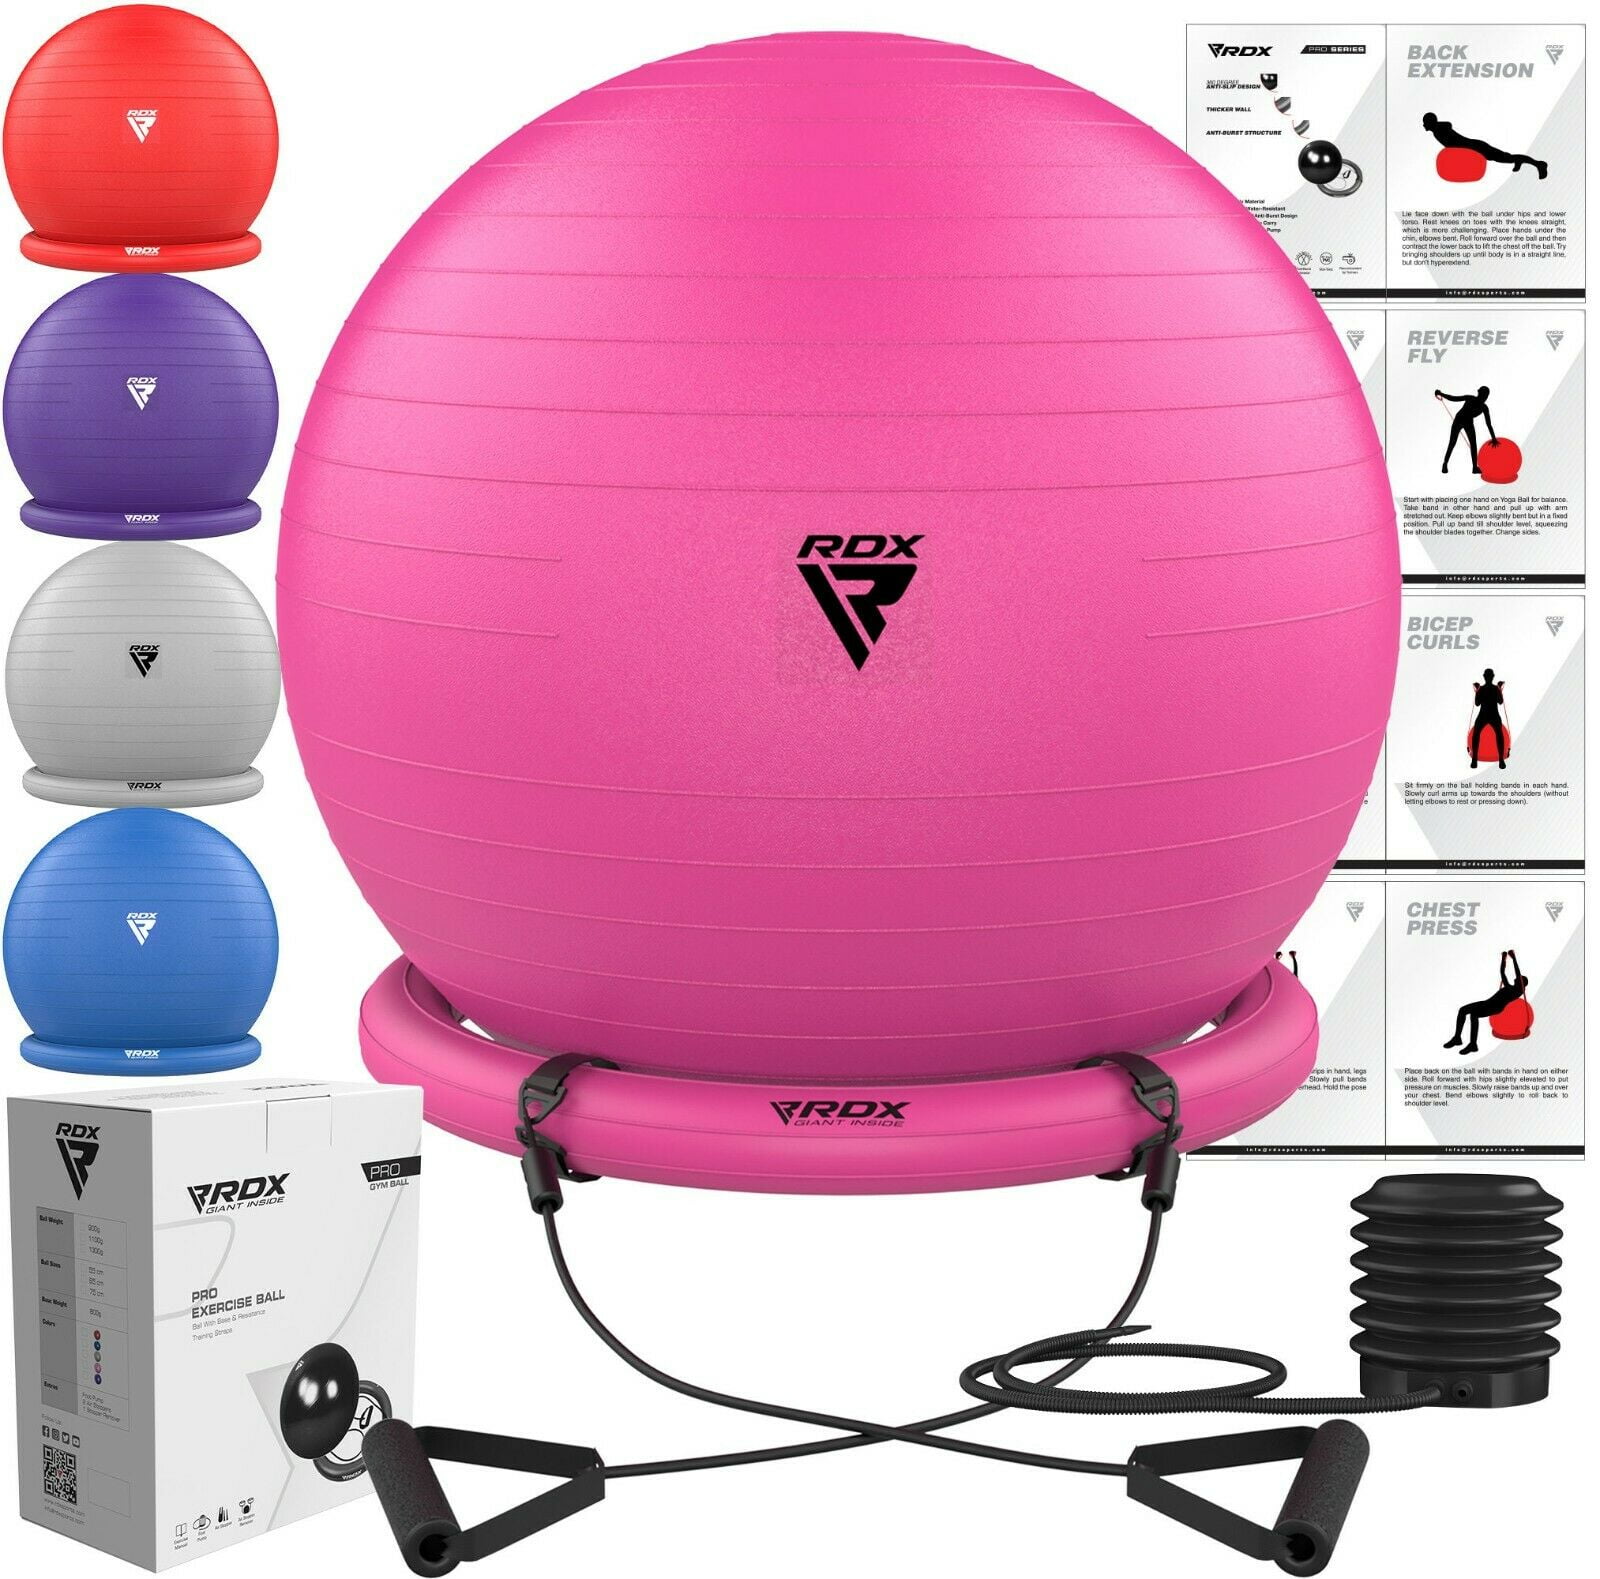 BIGTREE 75cm 2020 Upgrade Yoga Ball Exercise Fitness Core Stability Balance Strength Anti-Burst Heavy Duty Prenatal Birthing Yogaball Gray 29.5 